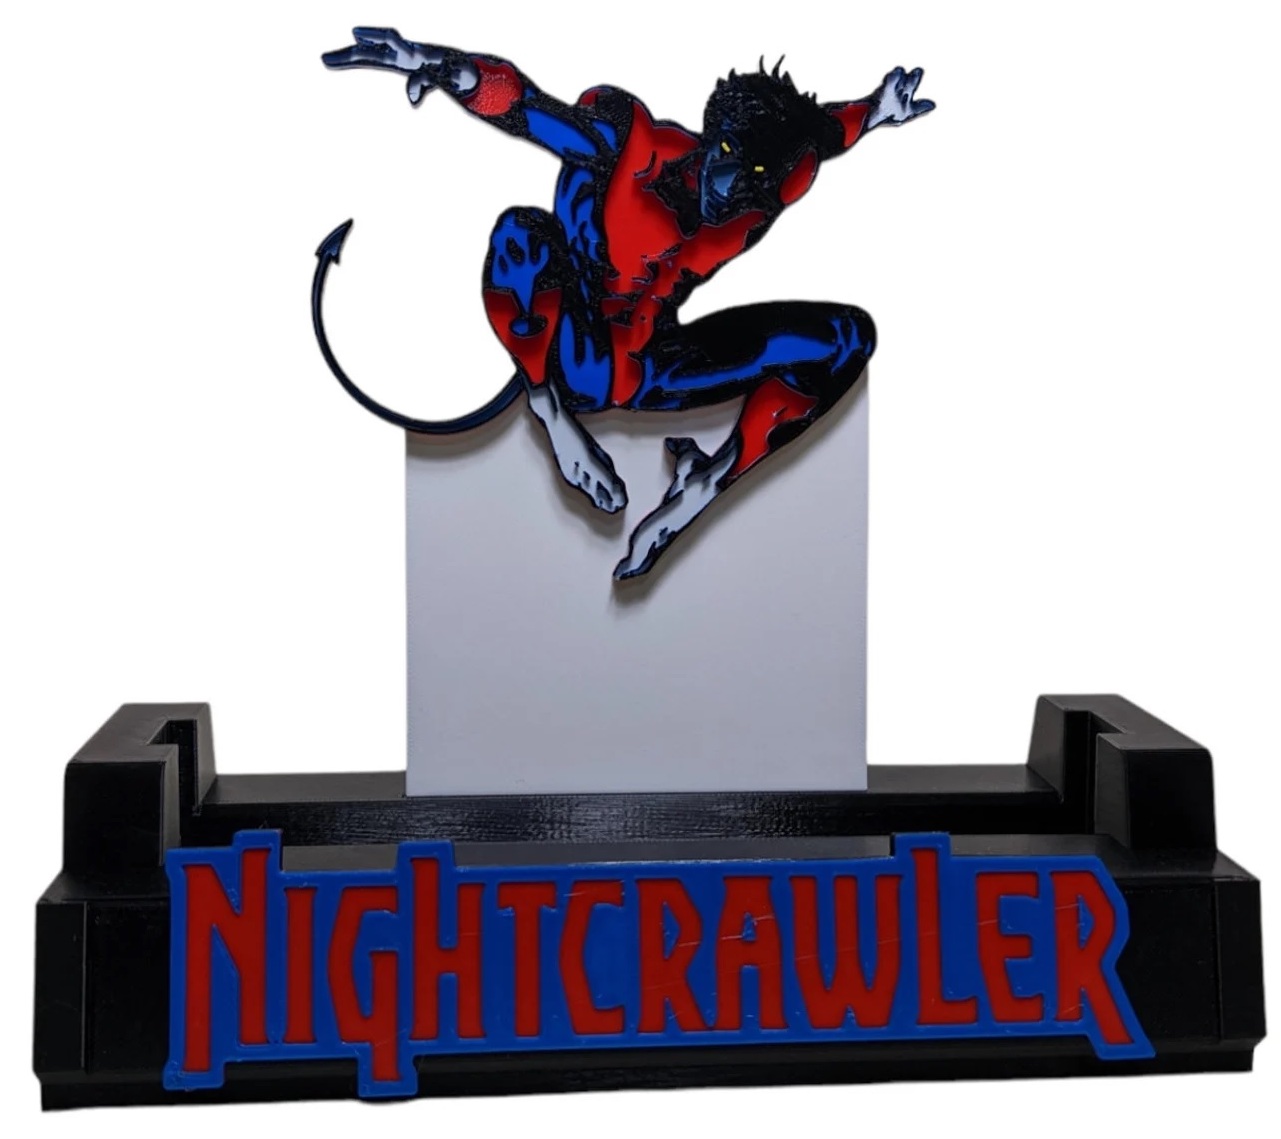 A black comic book stand featuring Nightcrawler of the X-Men